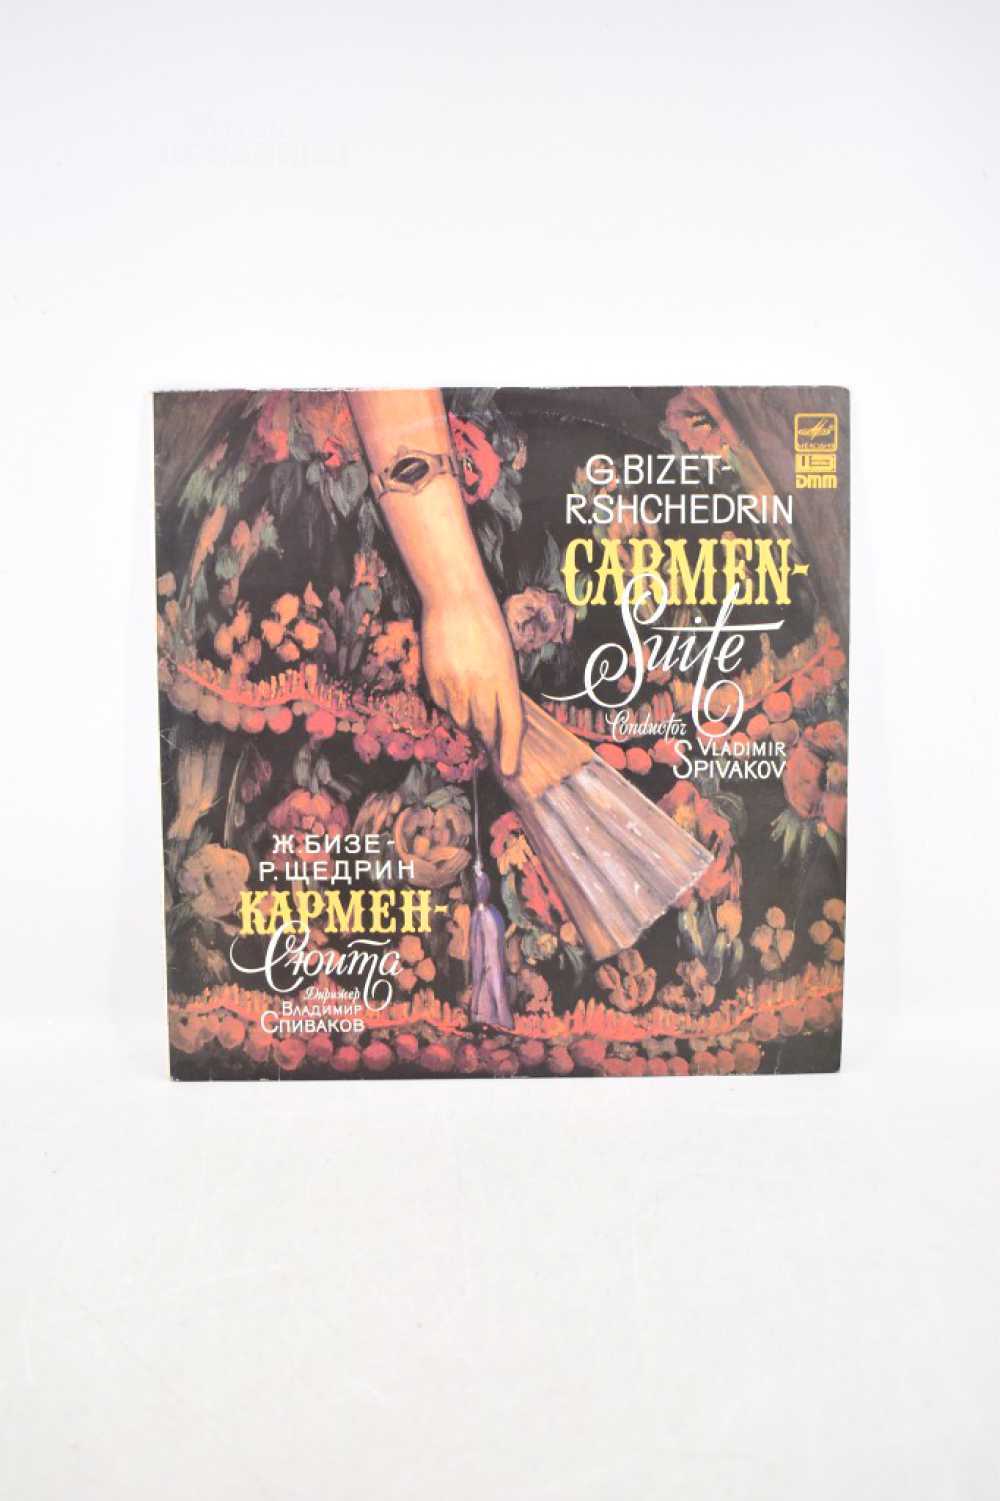 Vinyl 33 RPM Carmen Suite